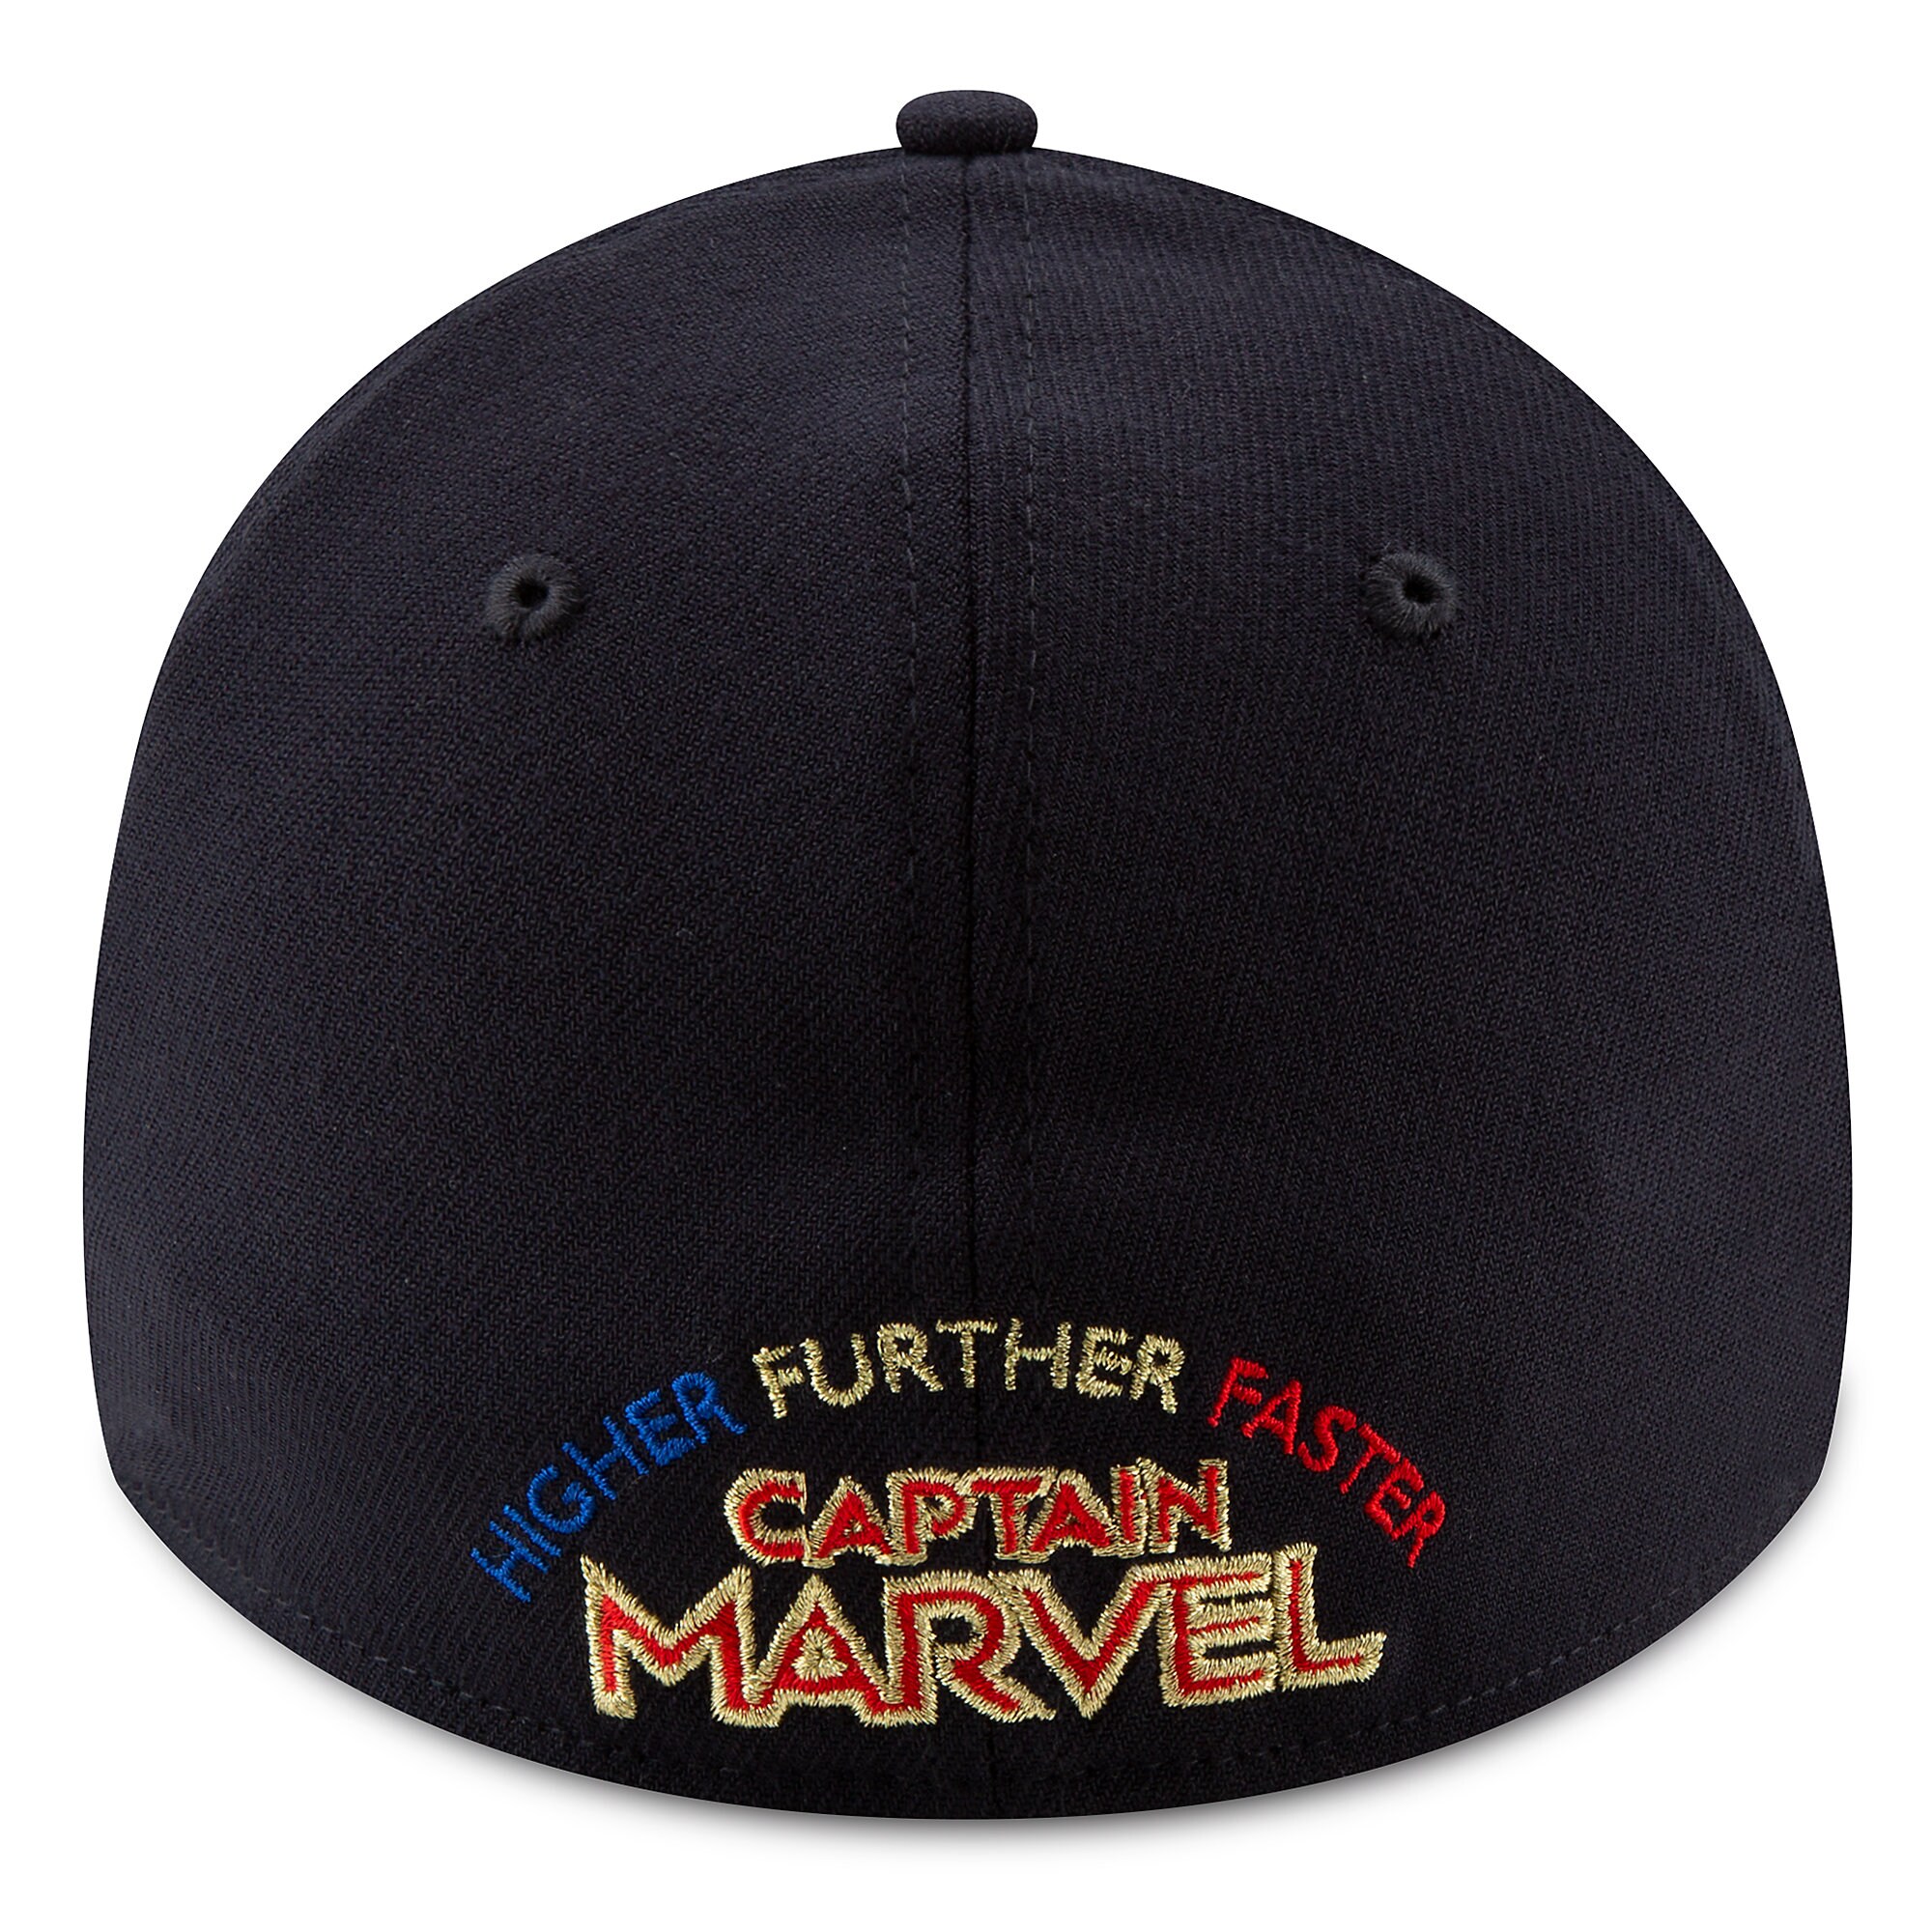 Marvel's Captain Marvel Baseball Cap for Adults by New Era - Marvel Studios 10th Anniversary